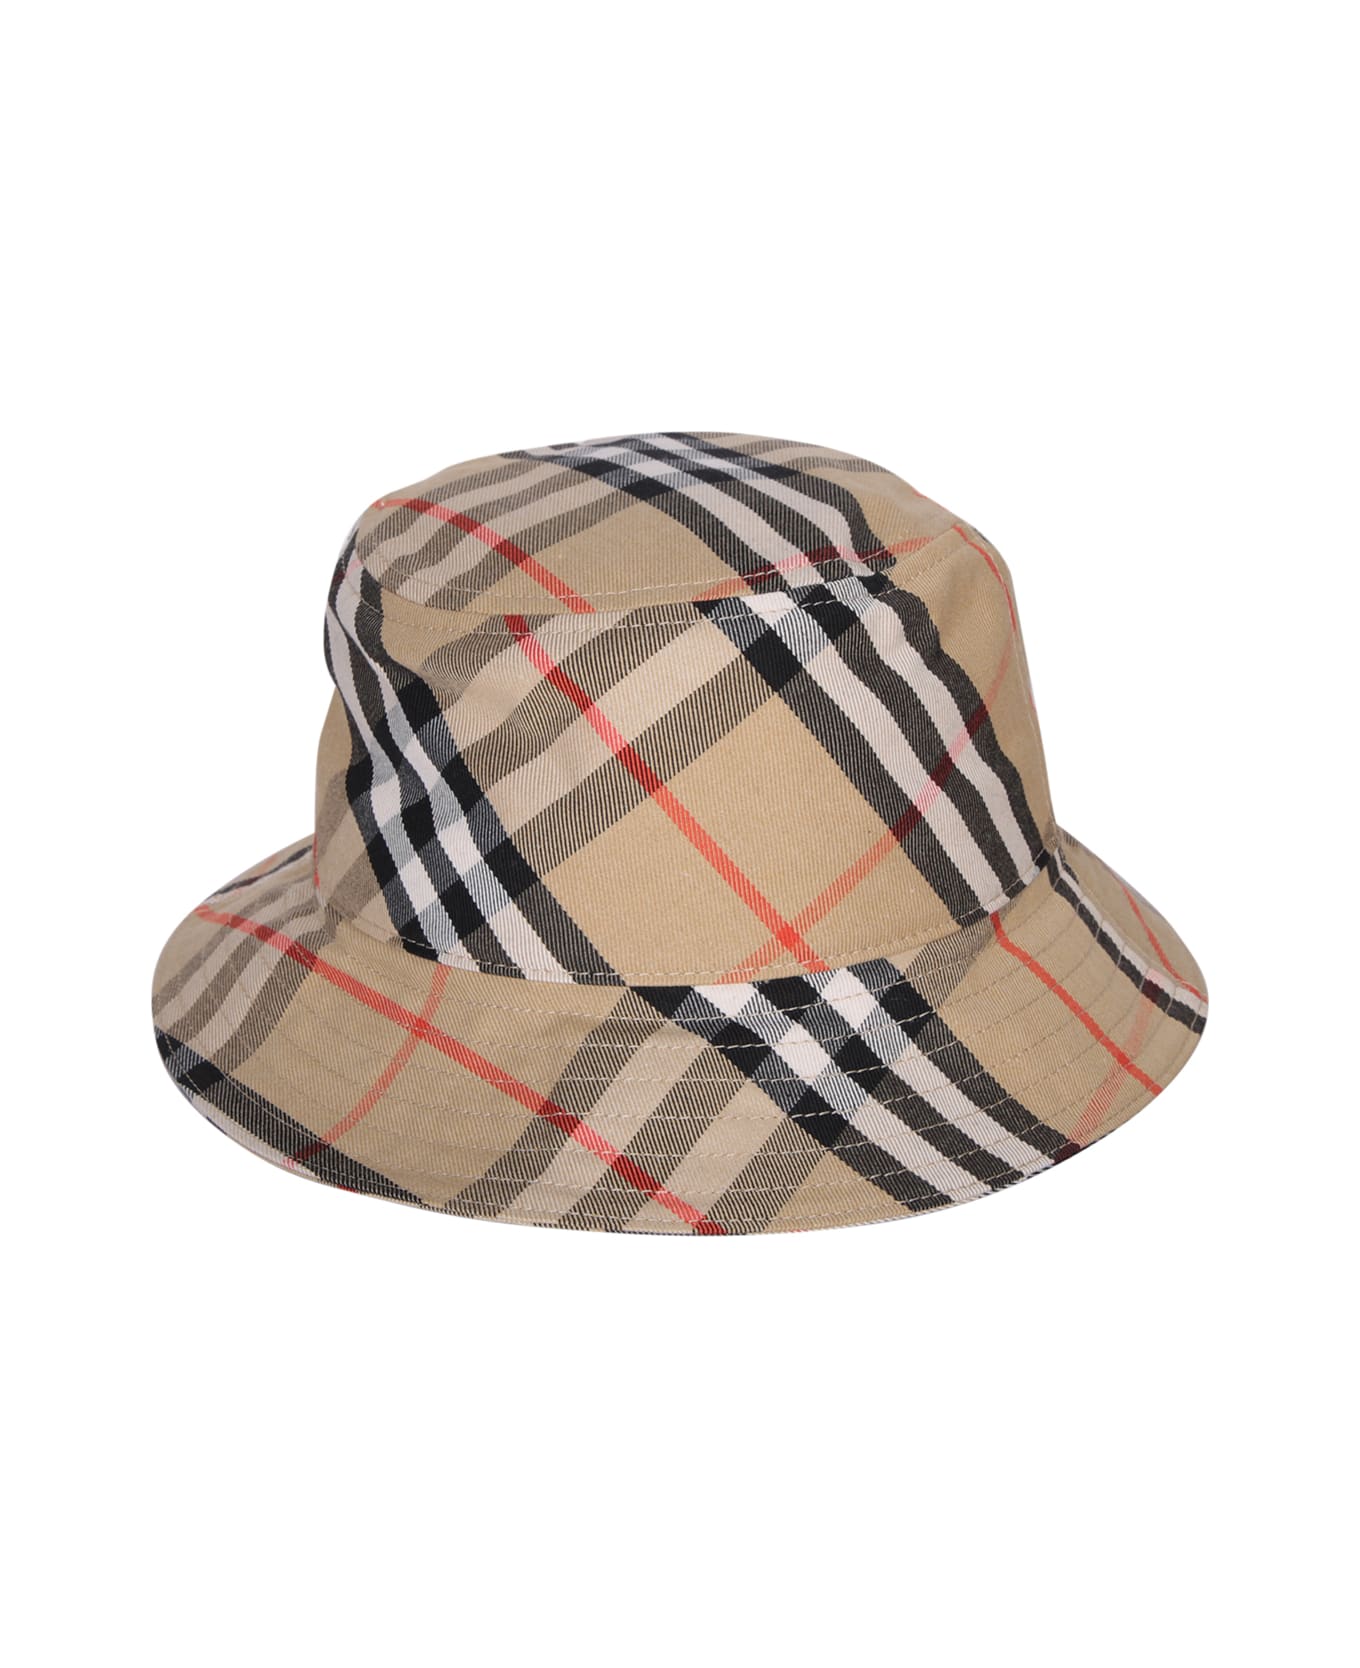 Burberry Sand Check Bucket Hat - Beige